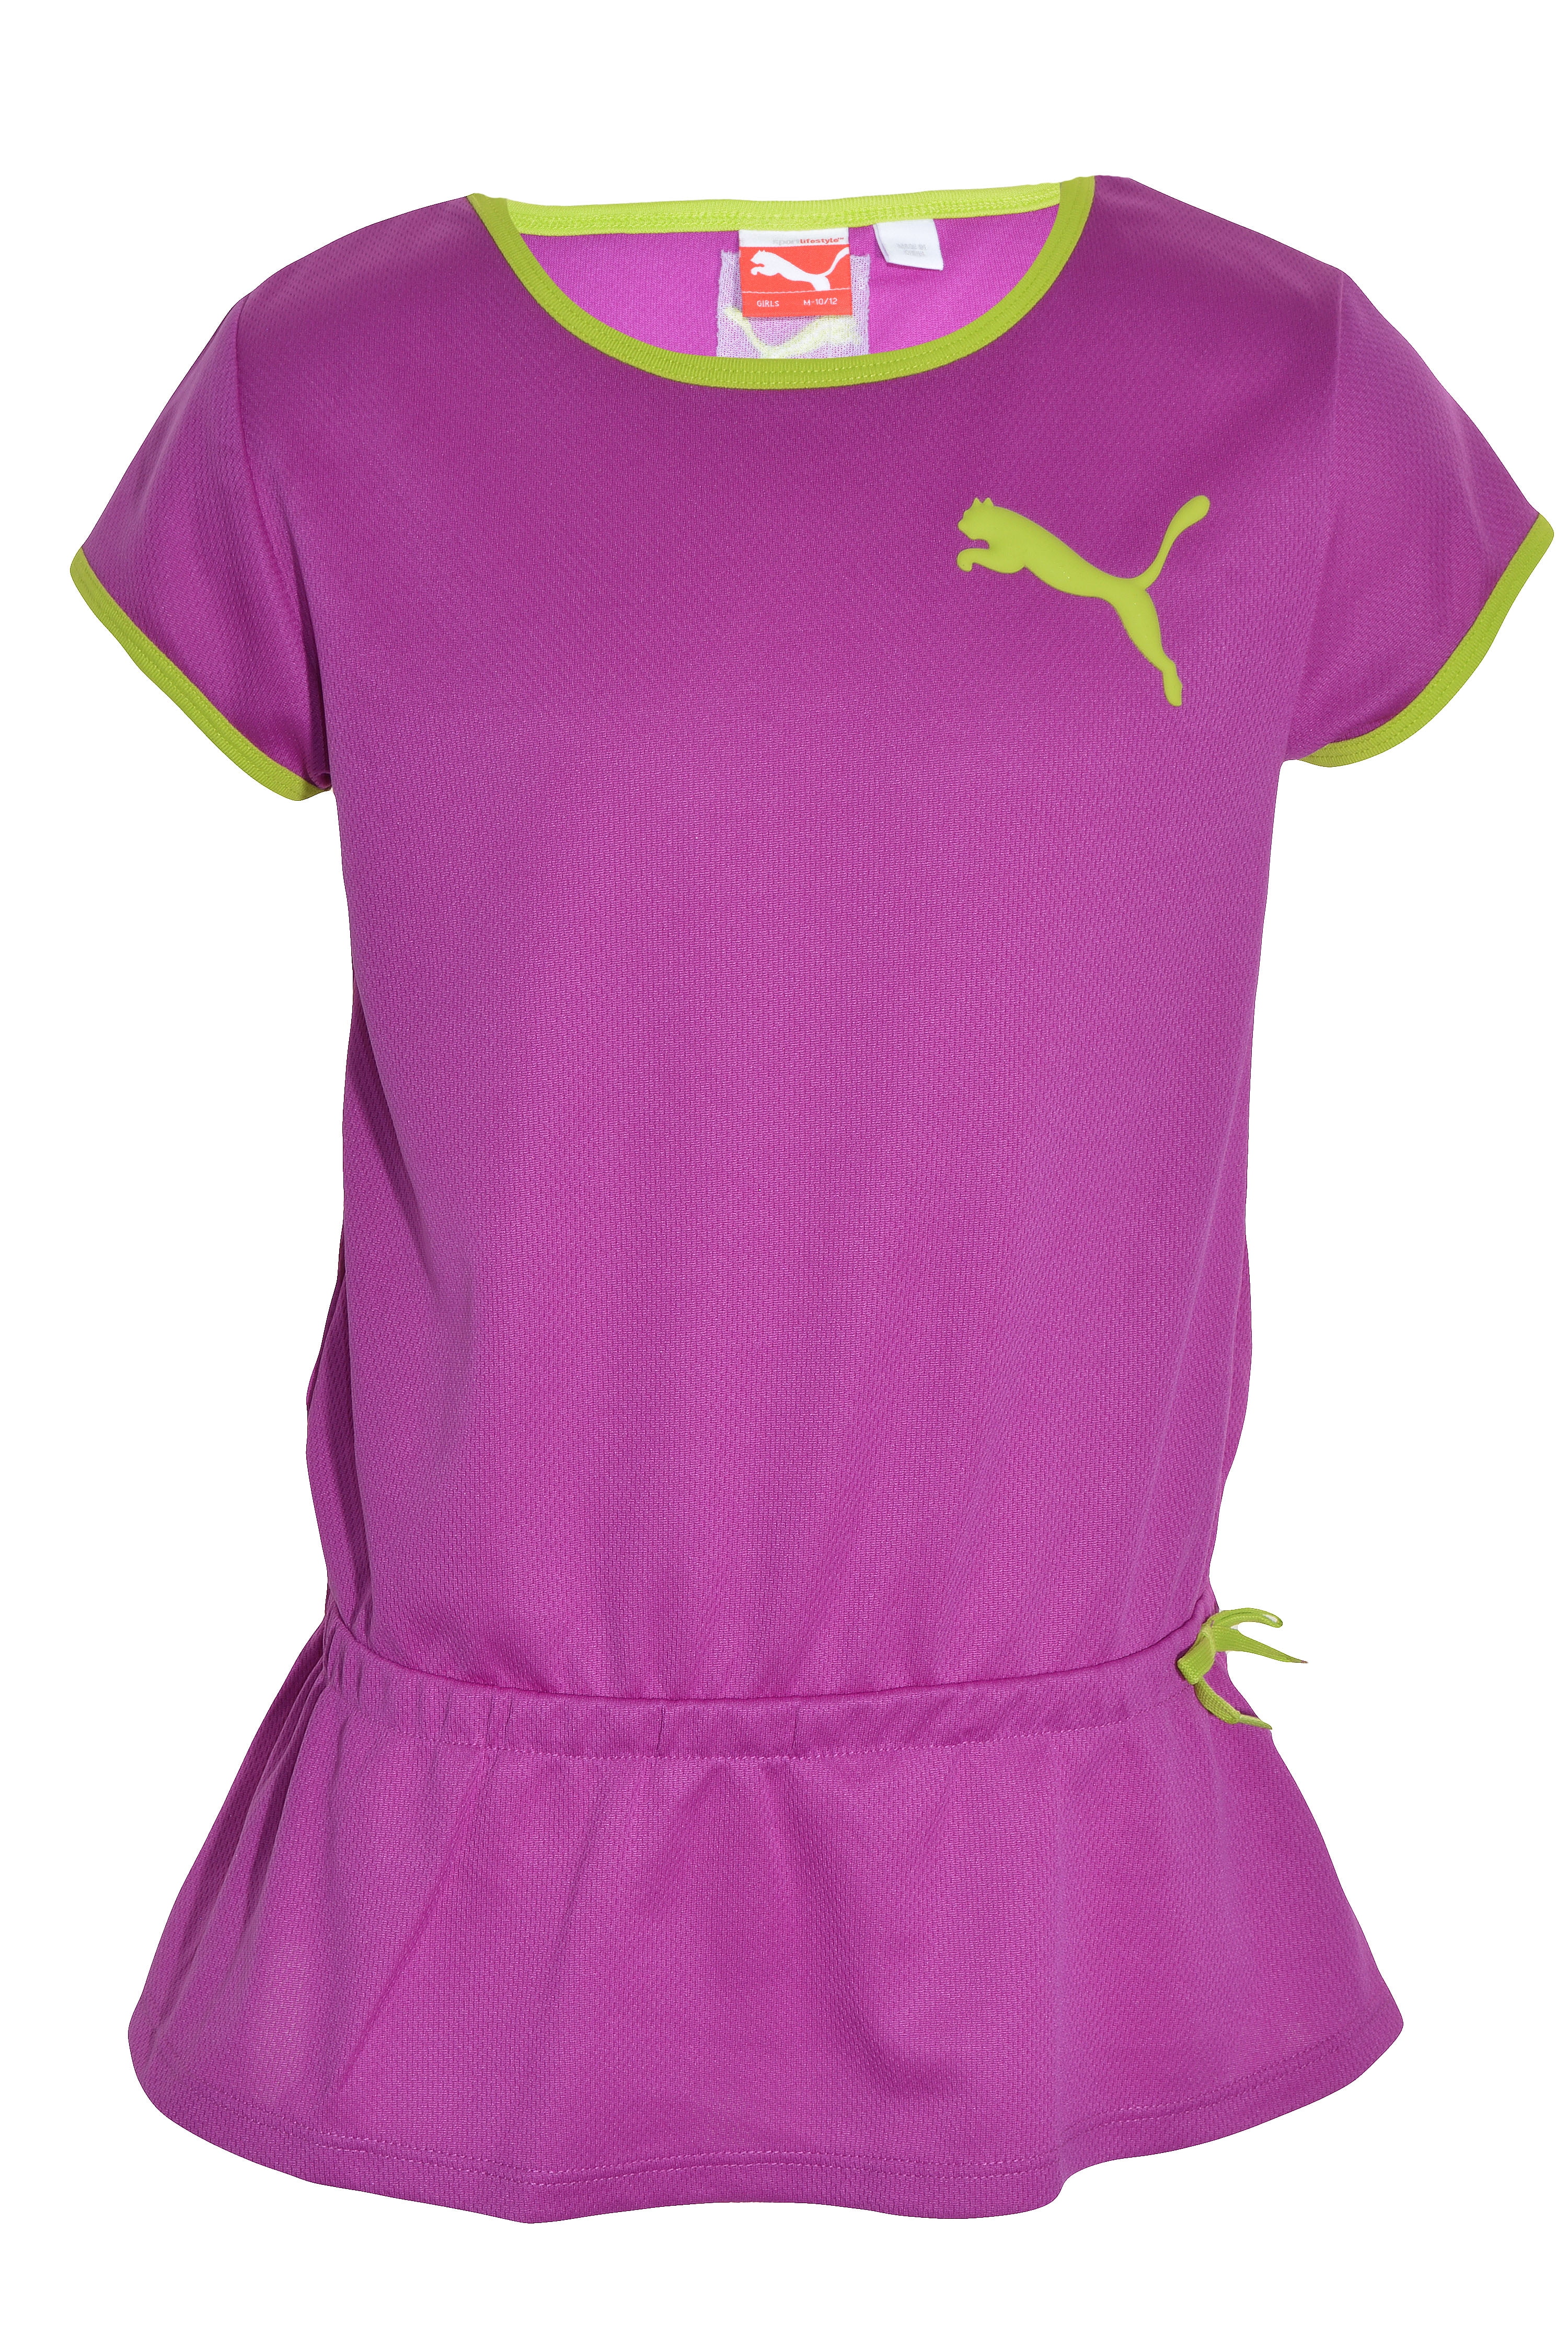 Puma Big Girls Peplum Athletic Shirt (Purple, M 10/12)